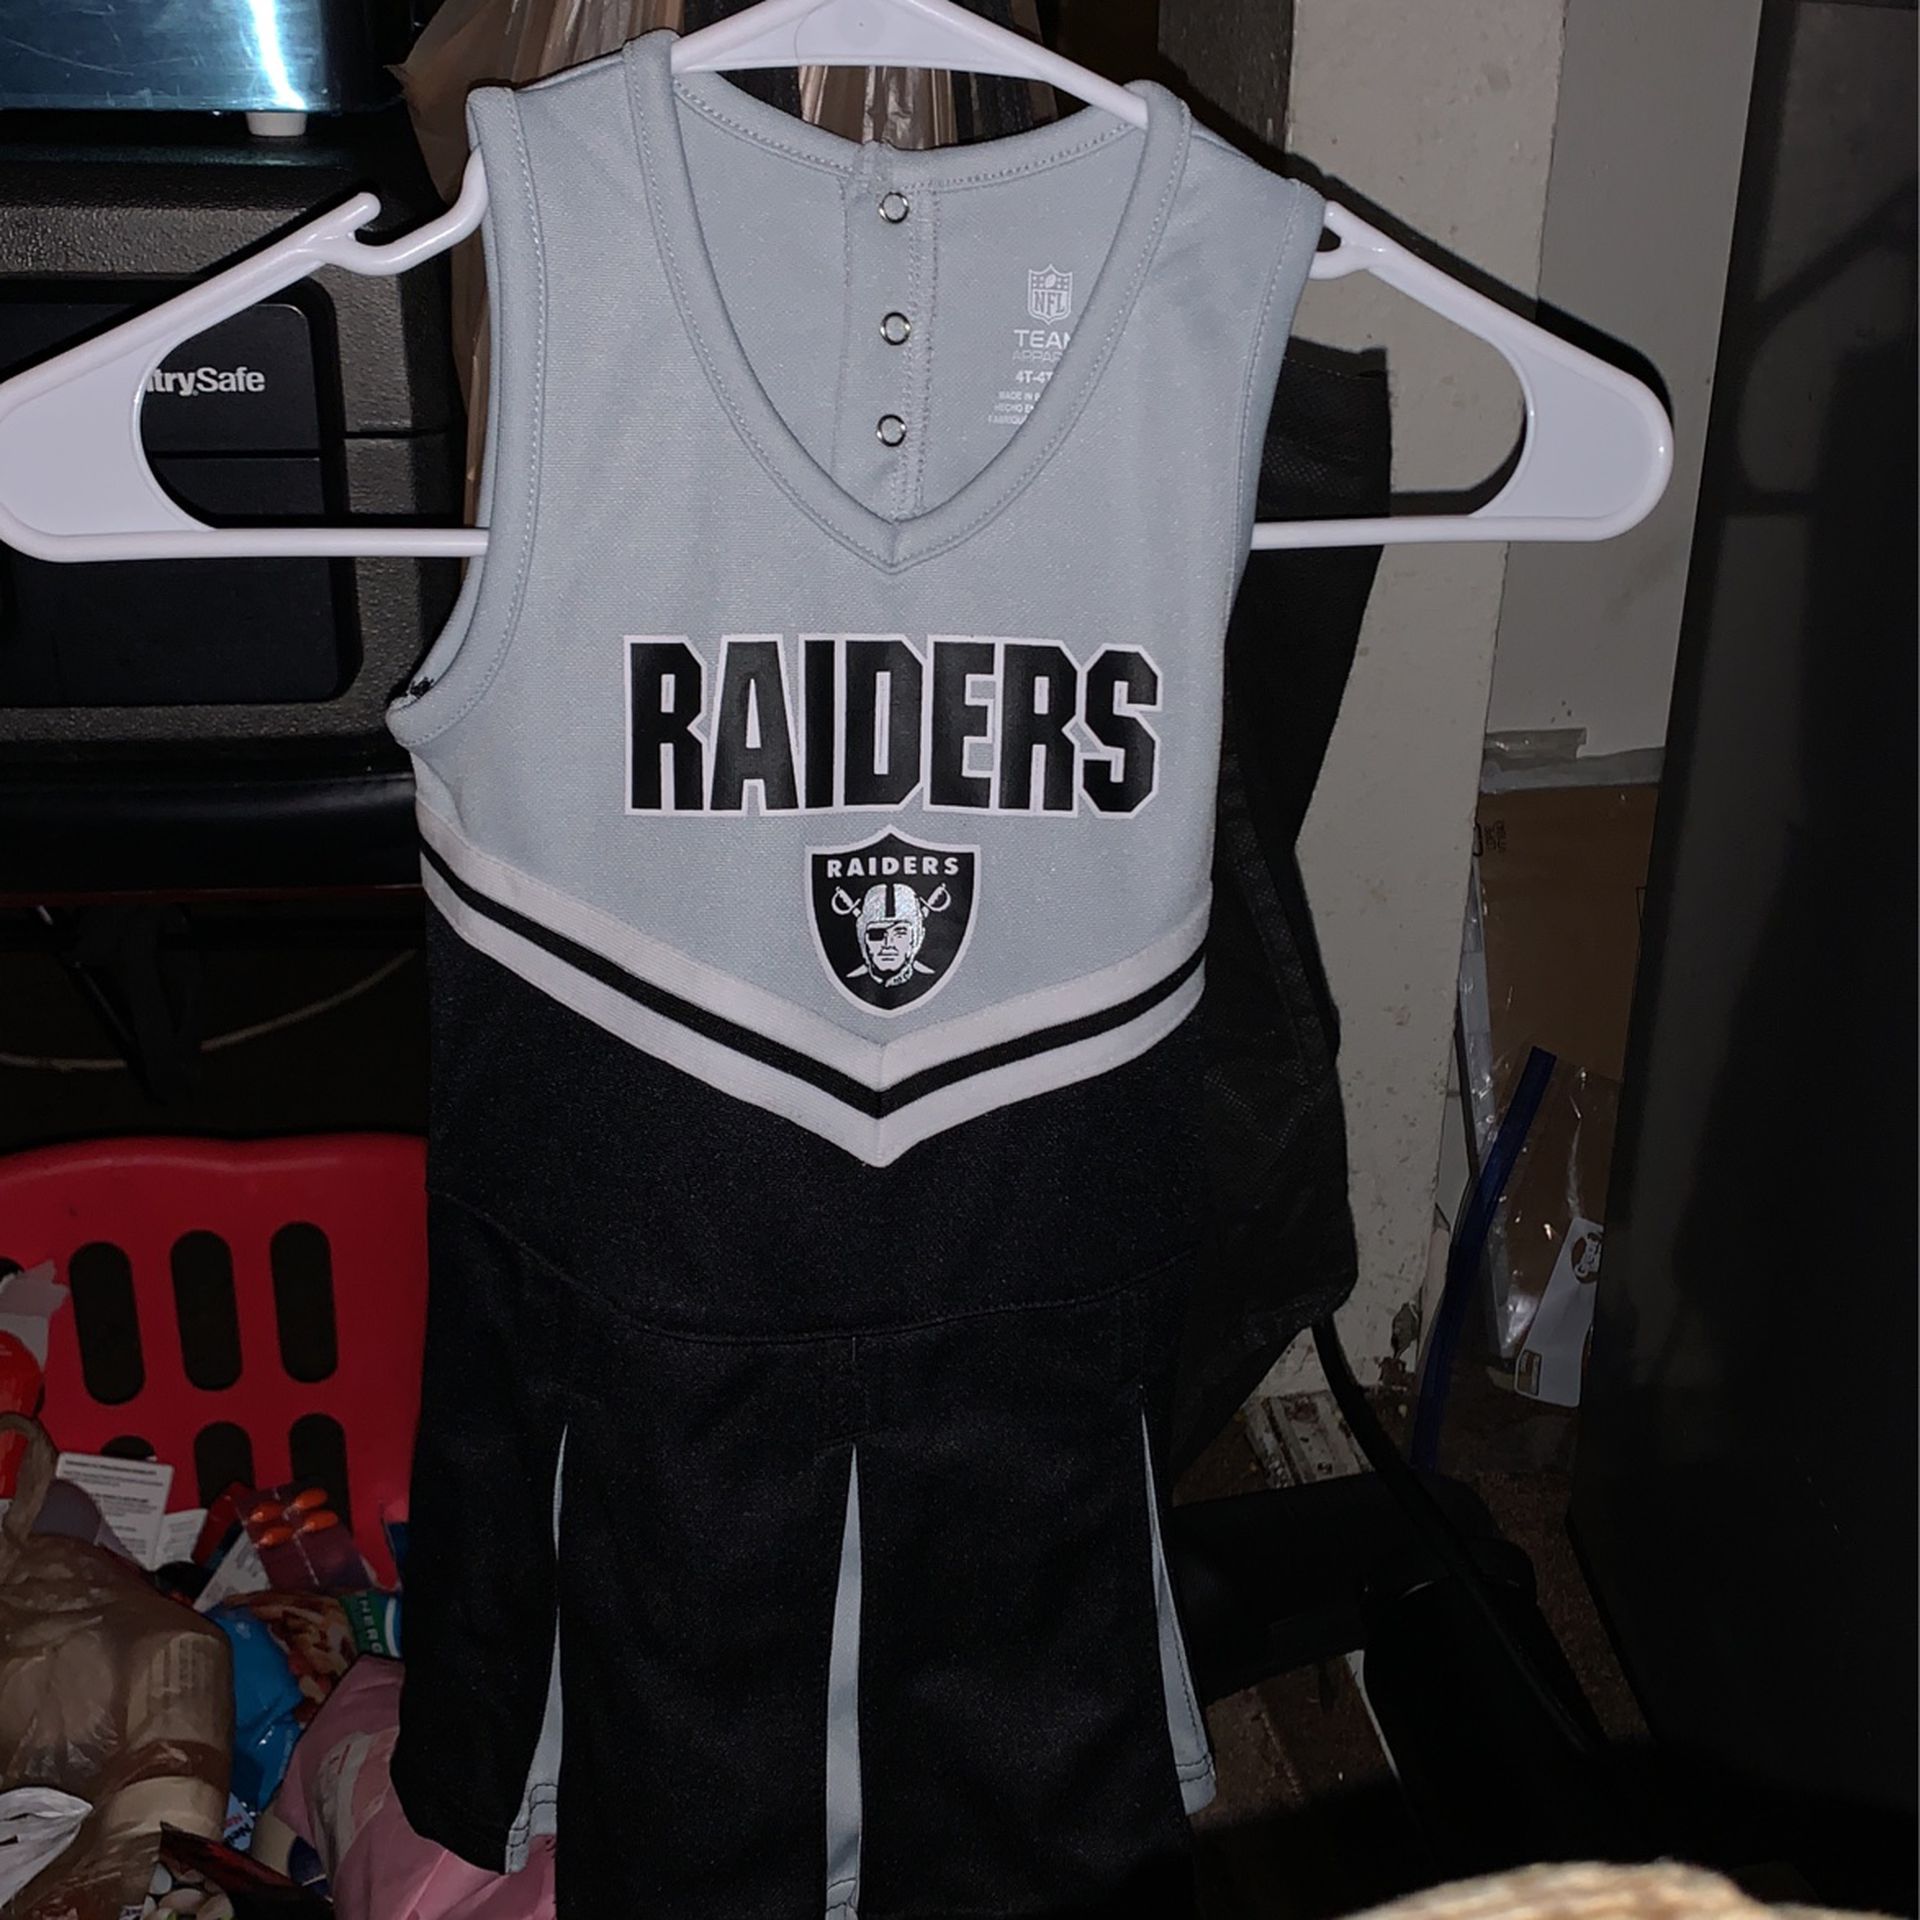 Raiders skirt For a Kid